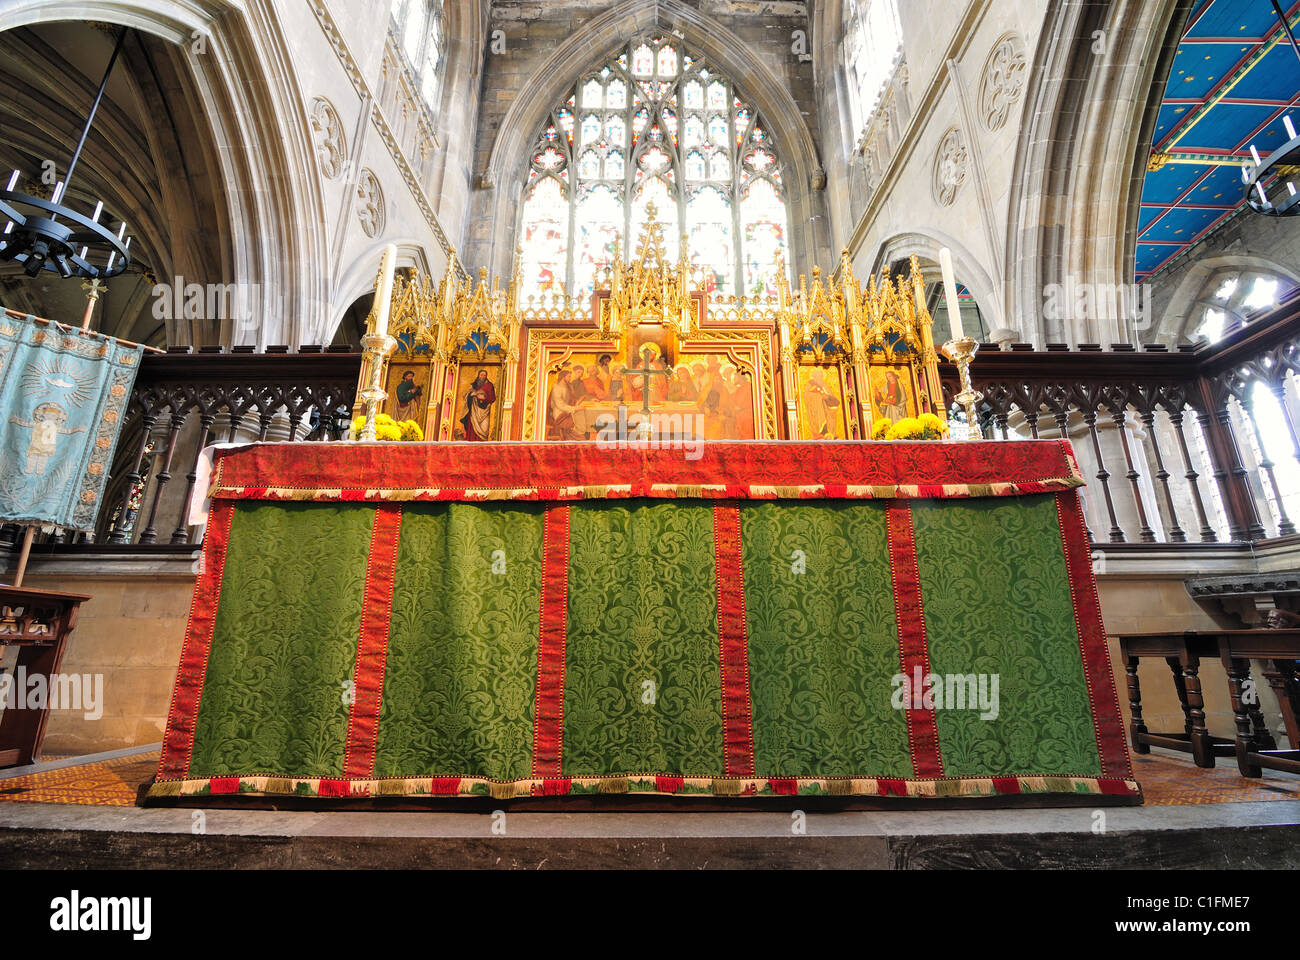 Interior de la Catedral de St.Mary en Beverley, Inglaterra. Foto de stock